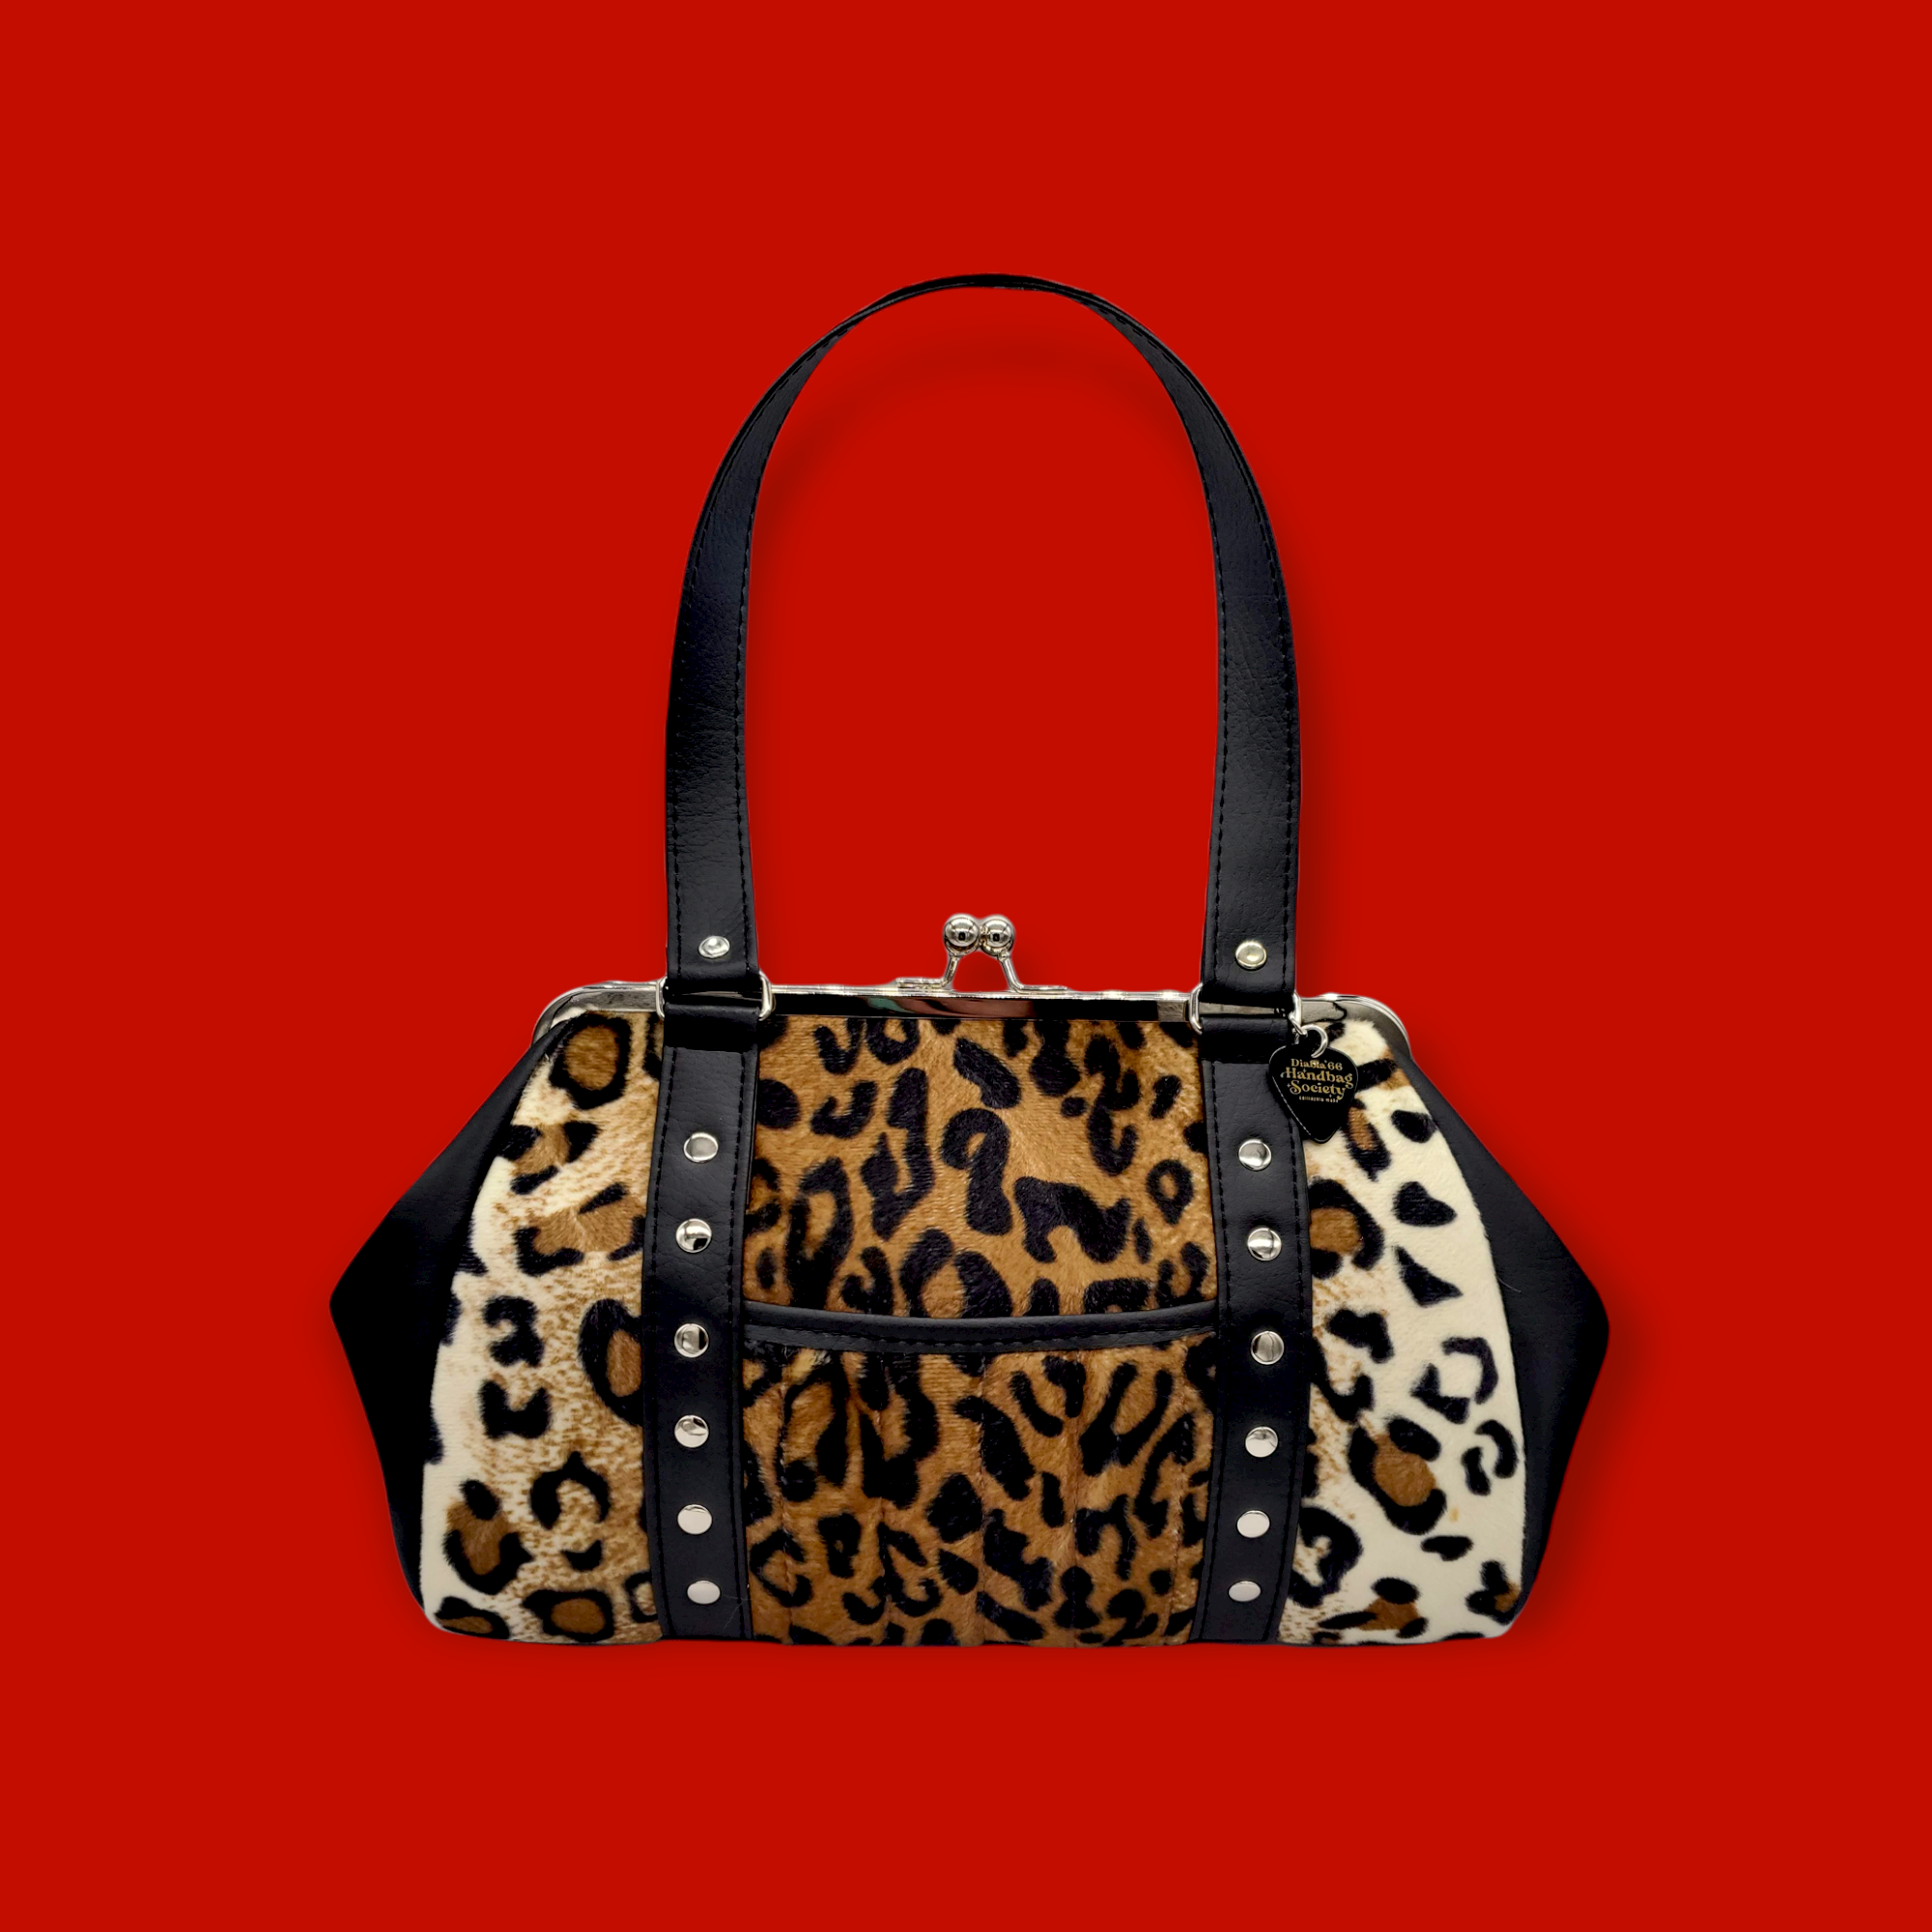 Gets Womens Leopard Evening Clutch Bag Leather Envelope bag Party Clutch  Purse (Brown): Handbags: Amazon.com